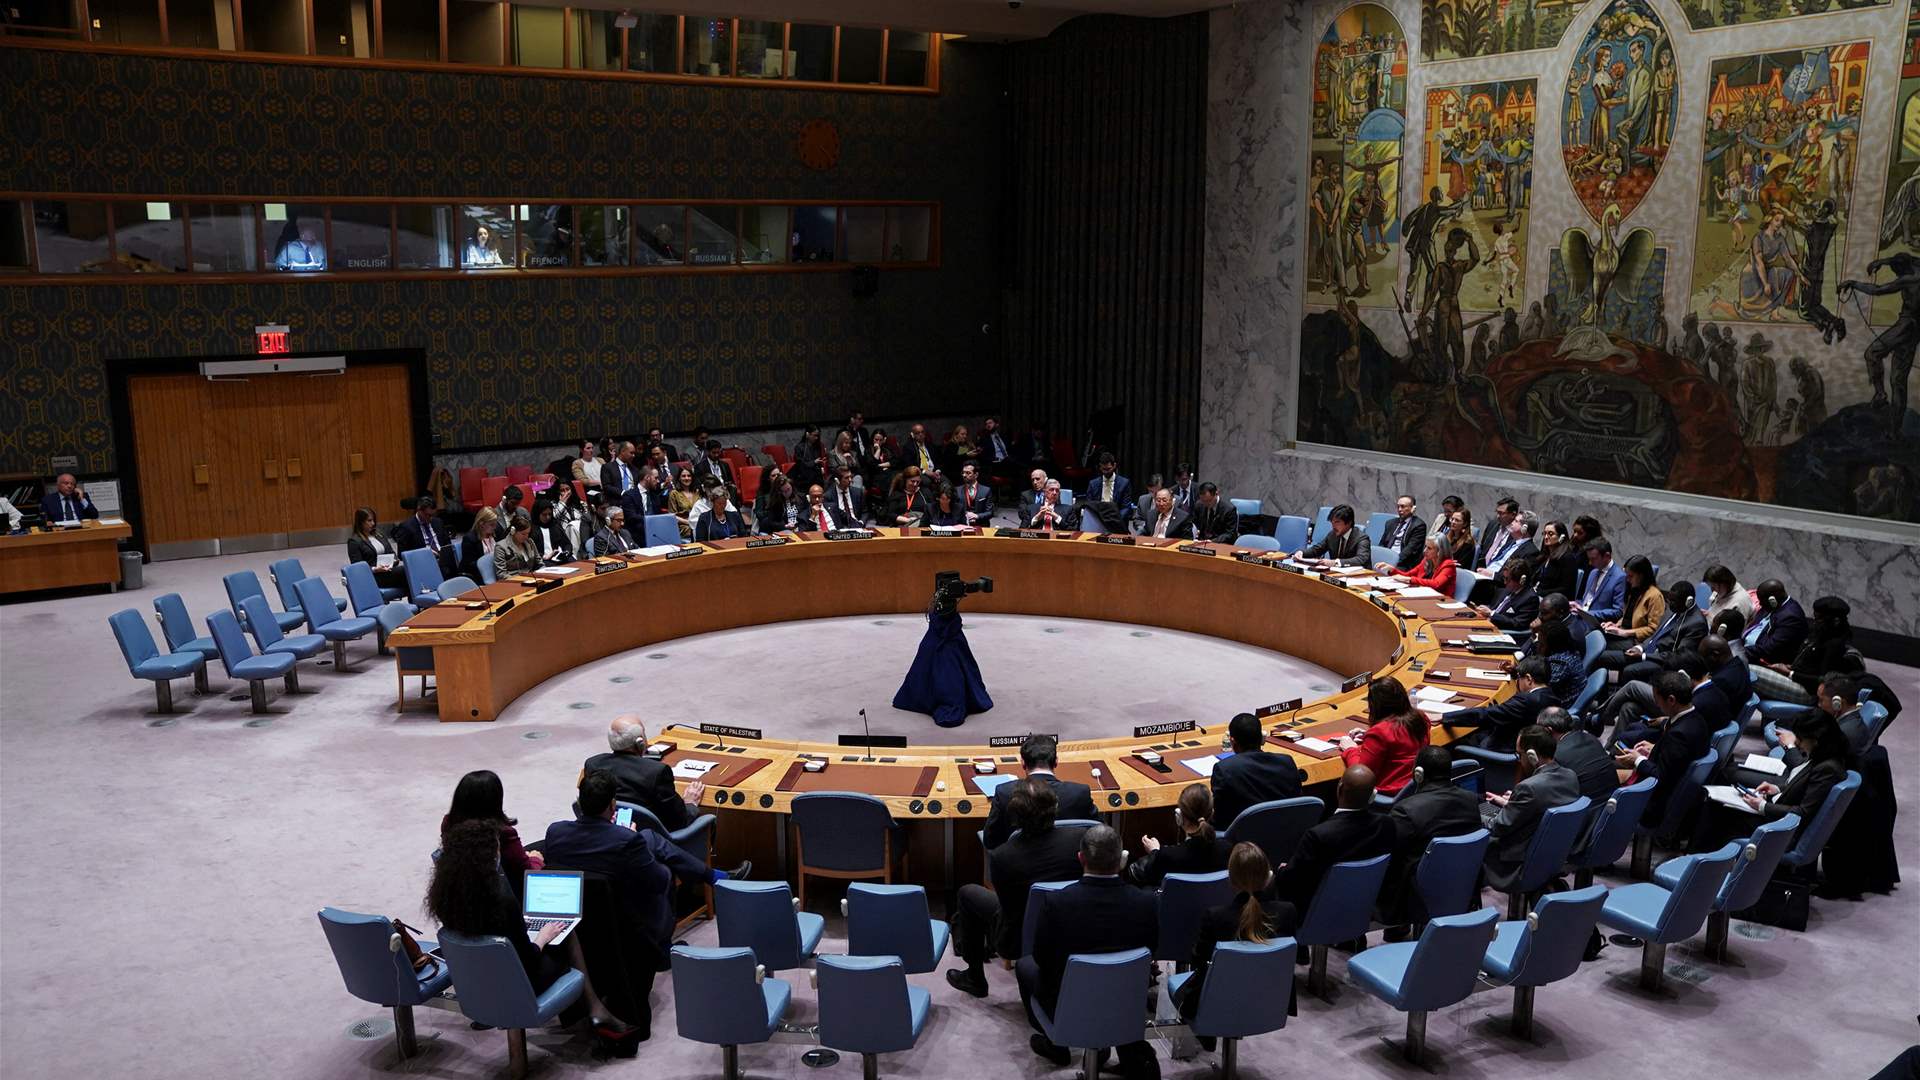 Humanitarian concerns: Arab nations condemn US veto on UN Gaza Resolution calling for ceasefire